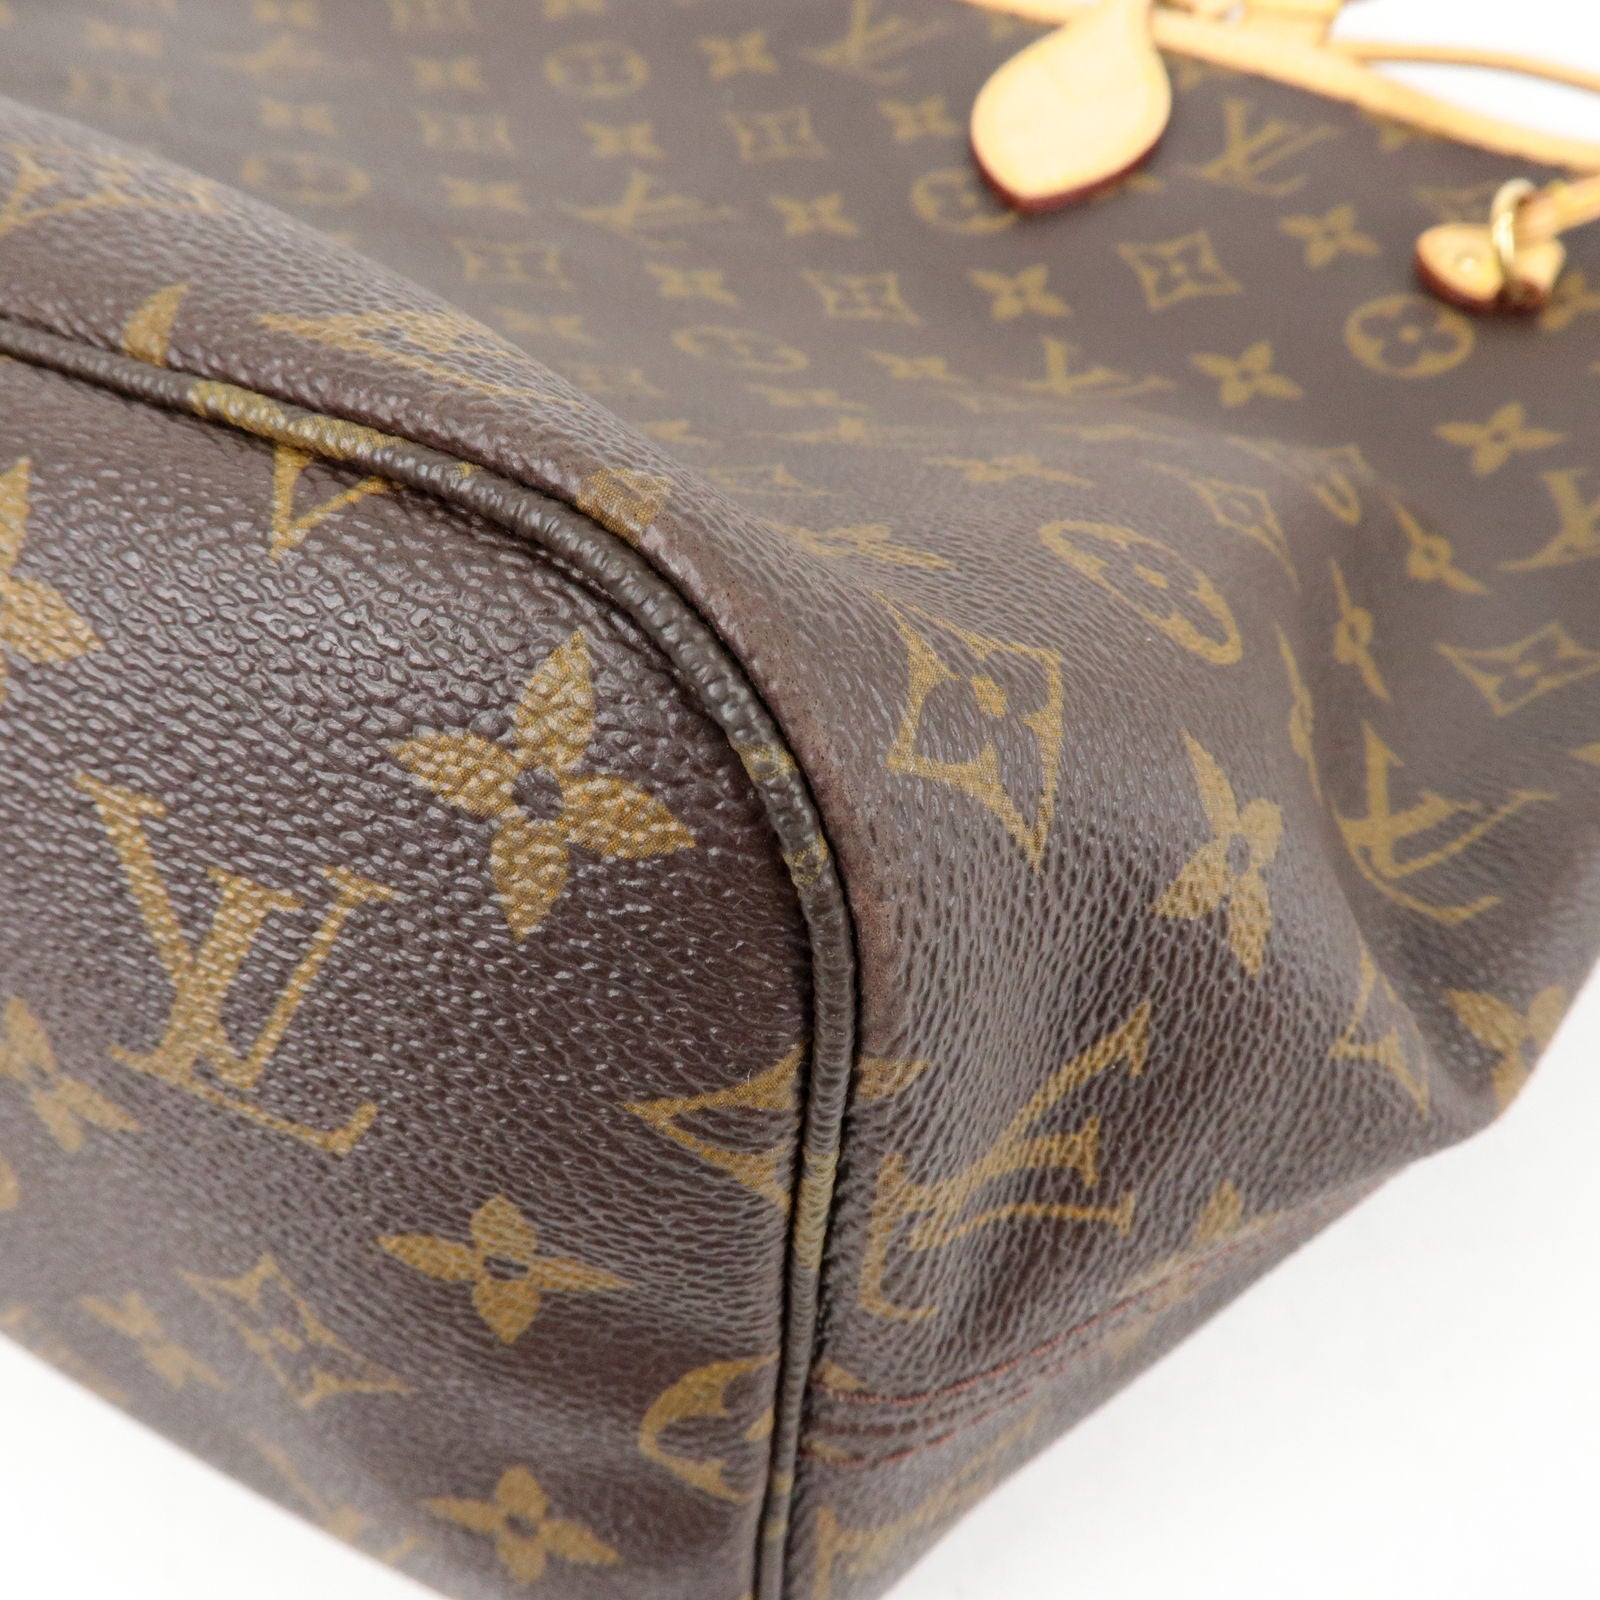 GORGEOUS Louis Vuitton Neverfull MM Monogram Handbag (barely used)